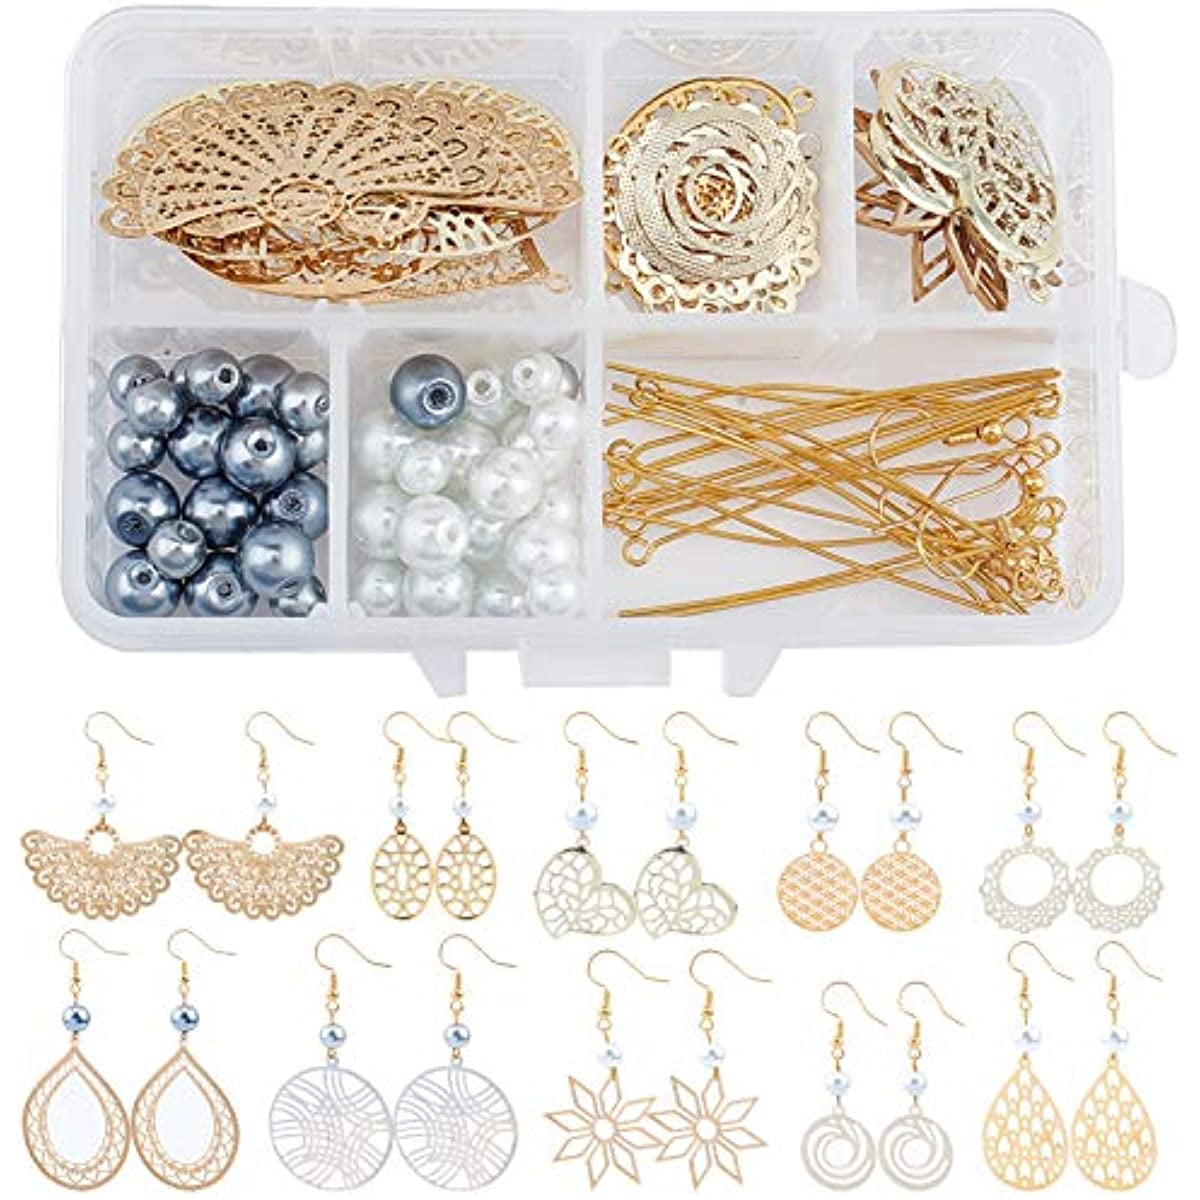  Kigeli 10 Pairs Diamond Painting Earrings Jewelry Diamond Art  Earring Kit for Jewelry Making 5D DIY Earring Making Kit for Adults Kids  Boho Dangle Drop Earrings Jewelry Crafting Charms Bulk (Boho)